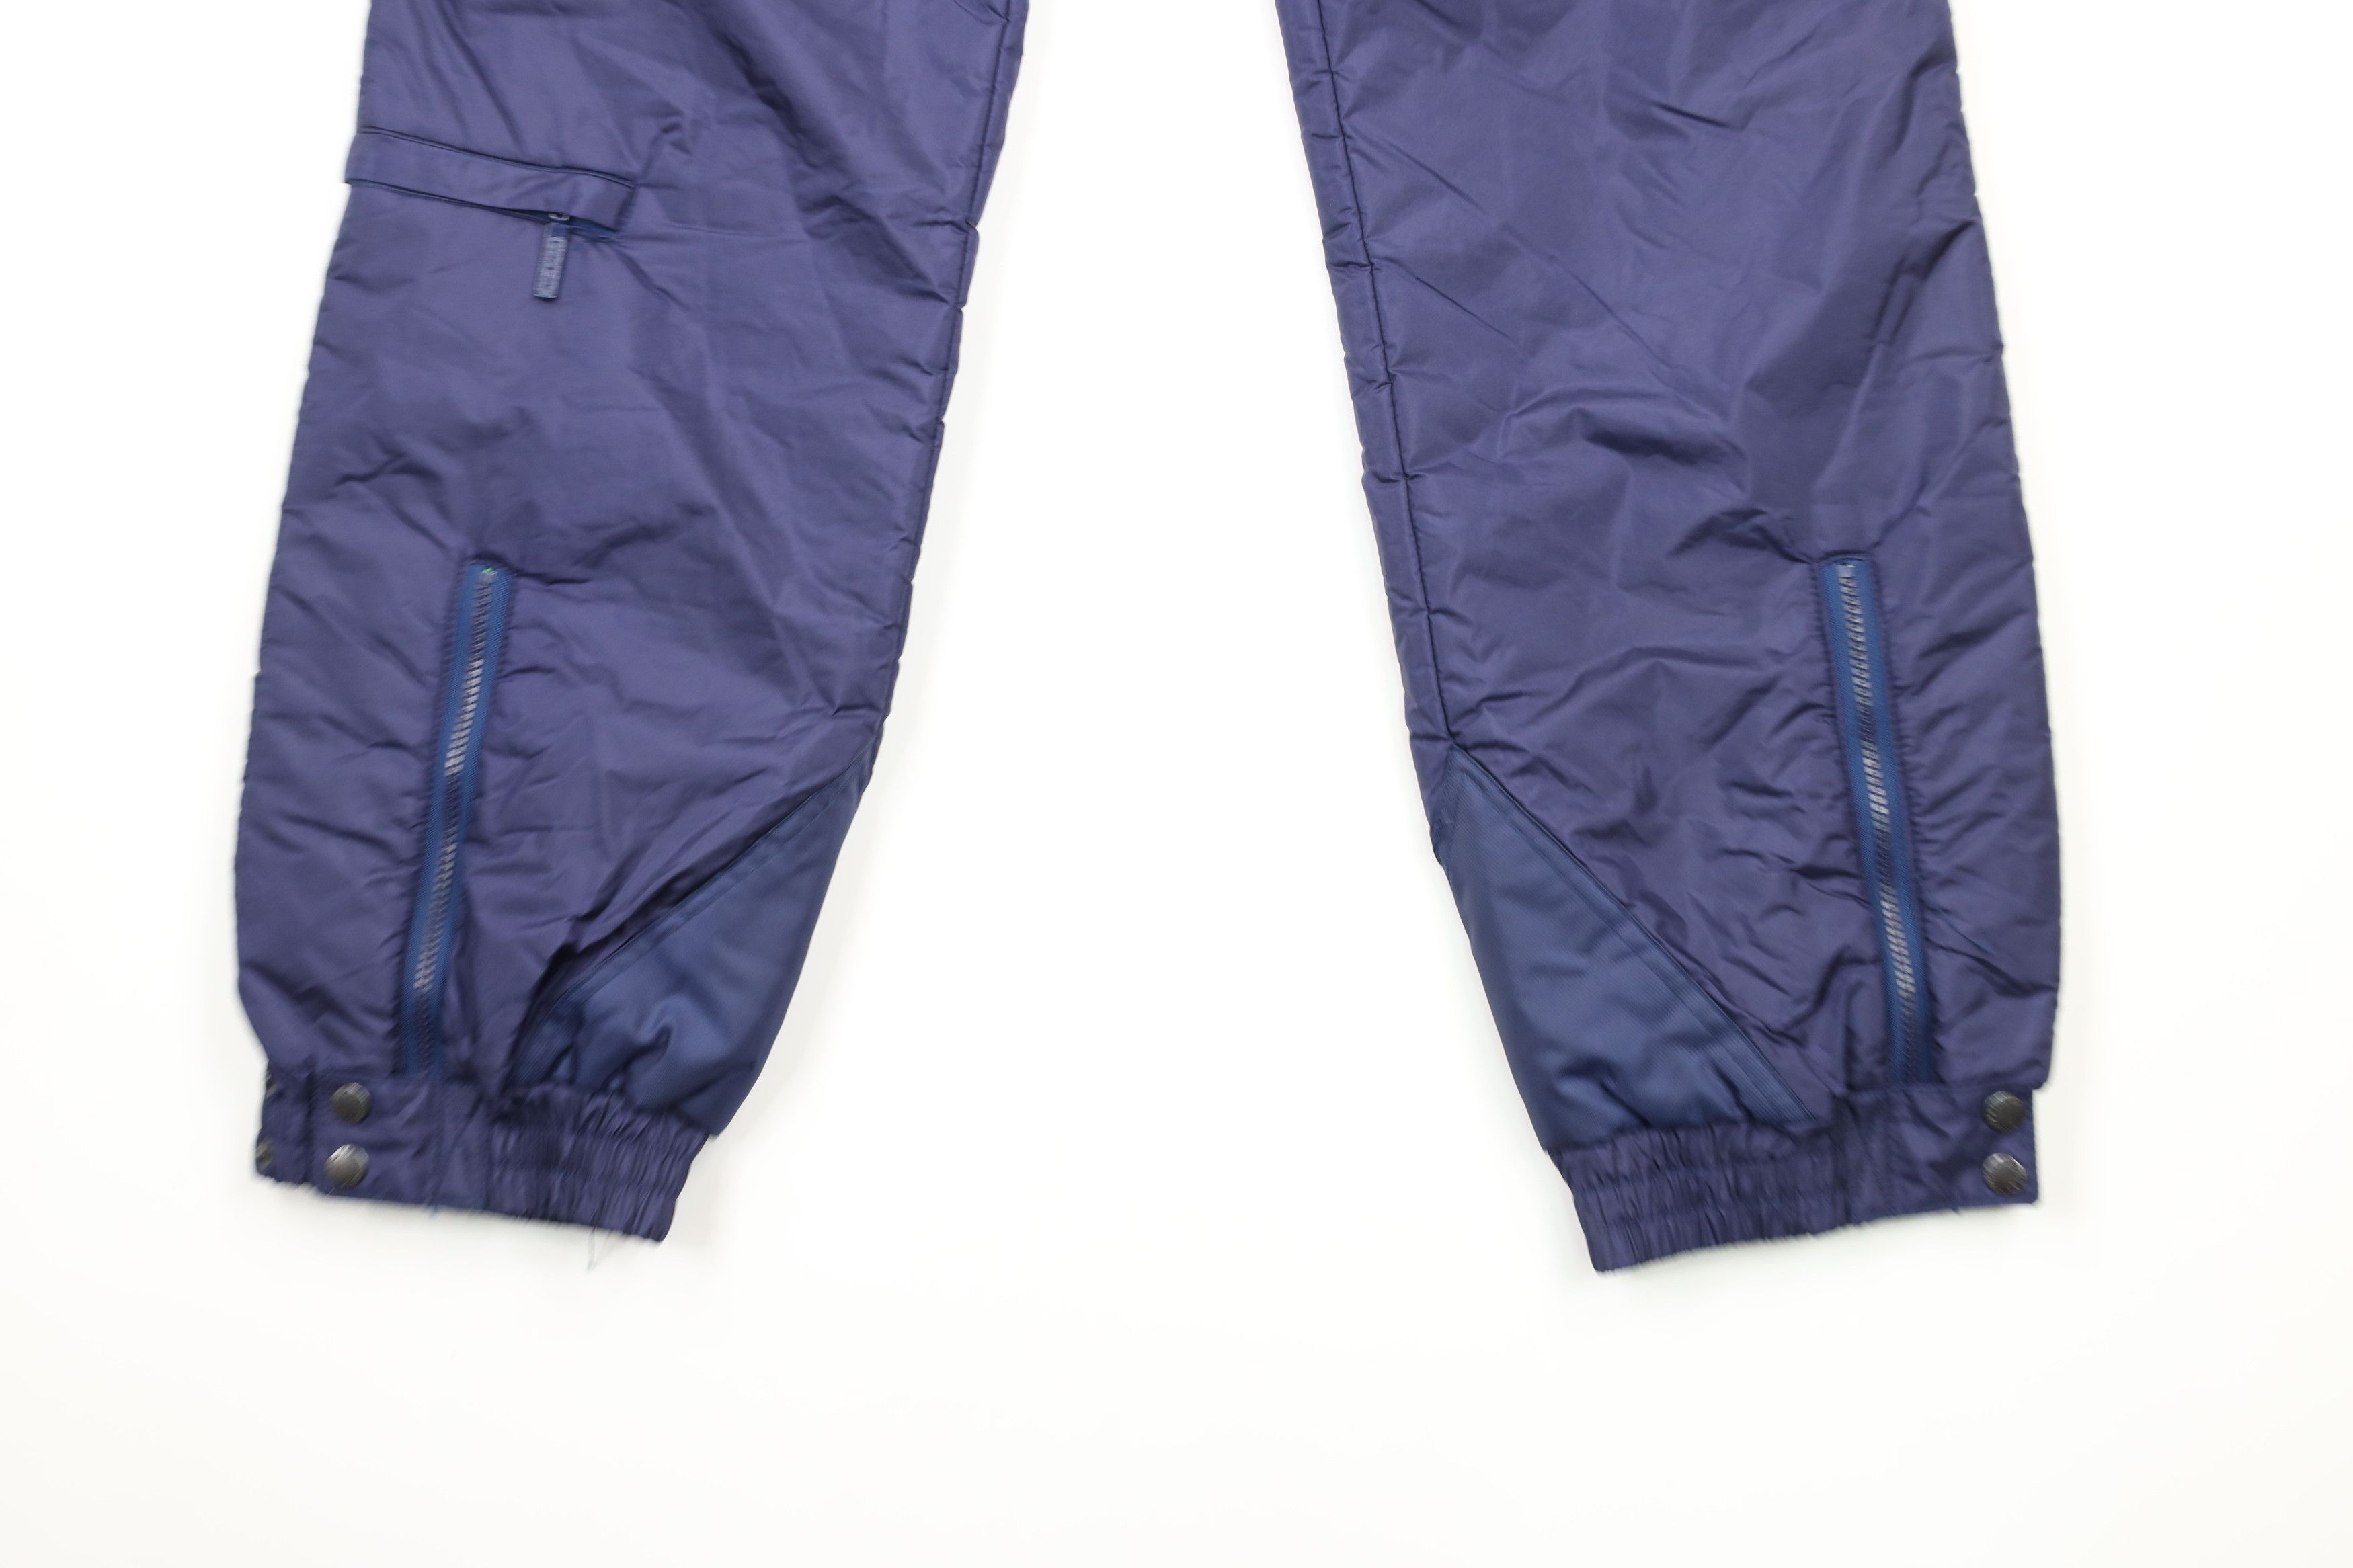 Vintage Vintage 90s Streetwear Cuffed Winter Snow Pants Navy Blue Size US 30 / EU 46 - 4 Thumbnail